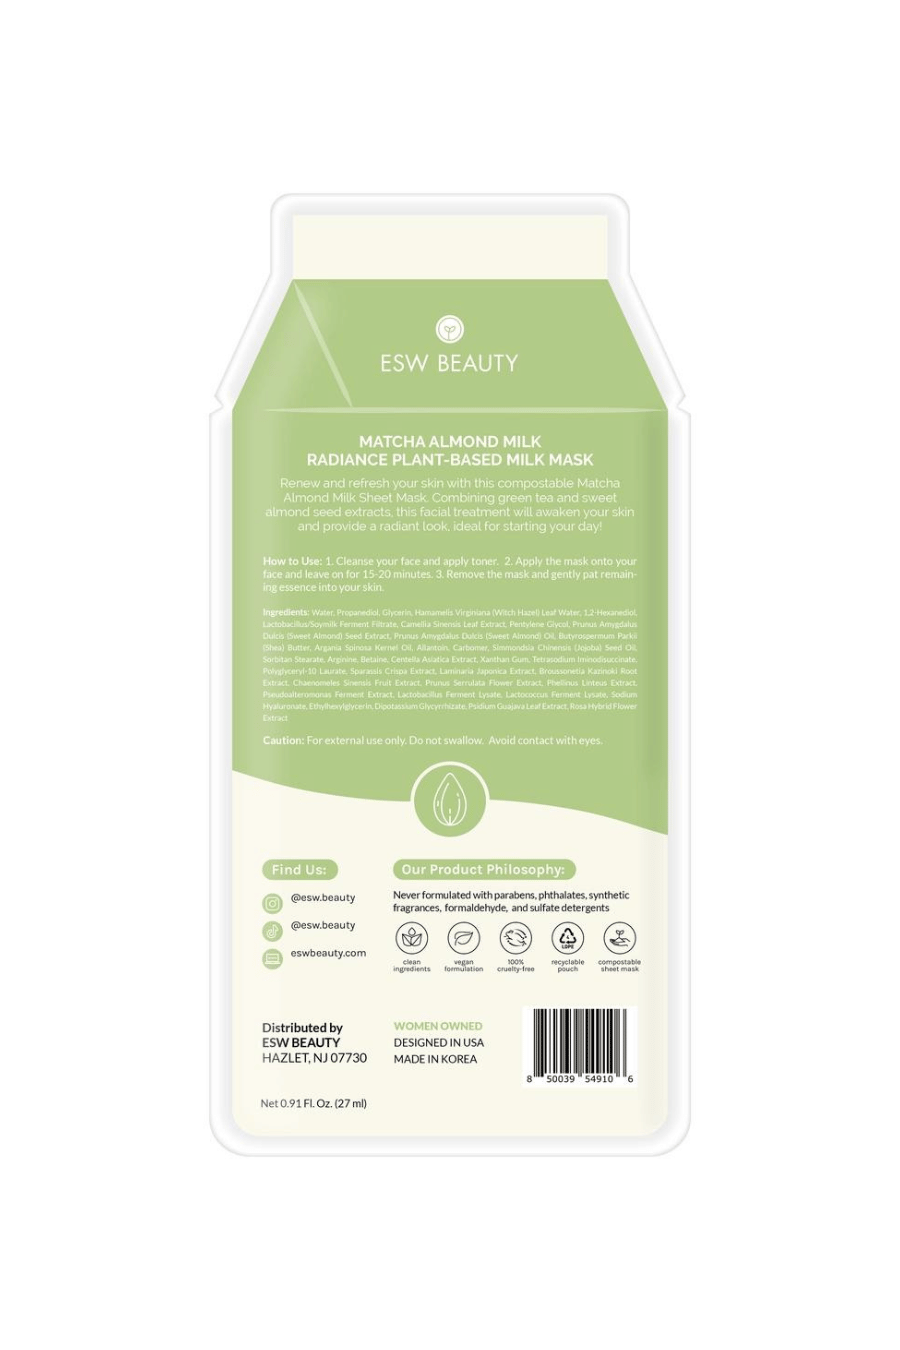 ESW Beauty Matcha Almond Milk Radiance Plant-Based Milk Sheet Mask